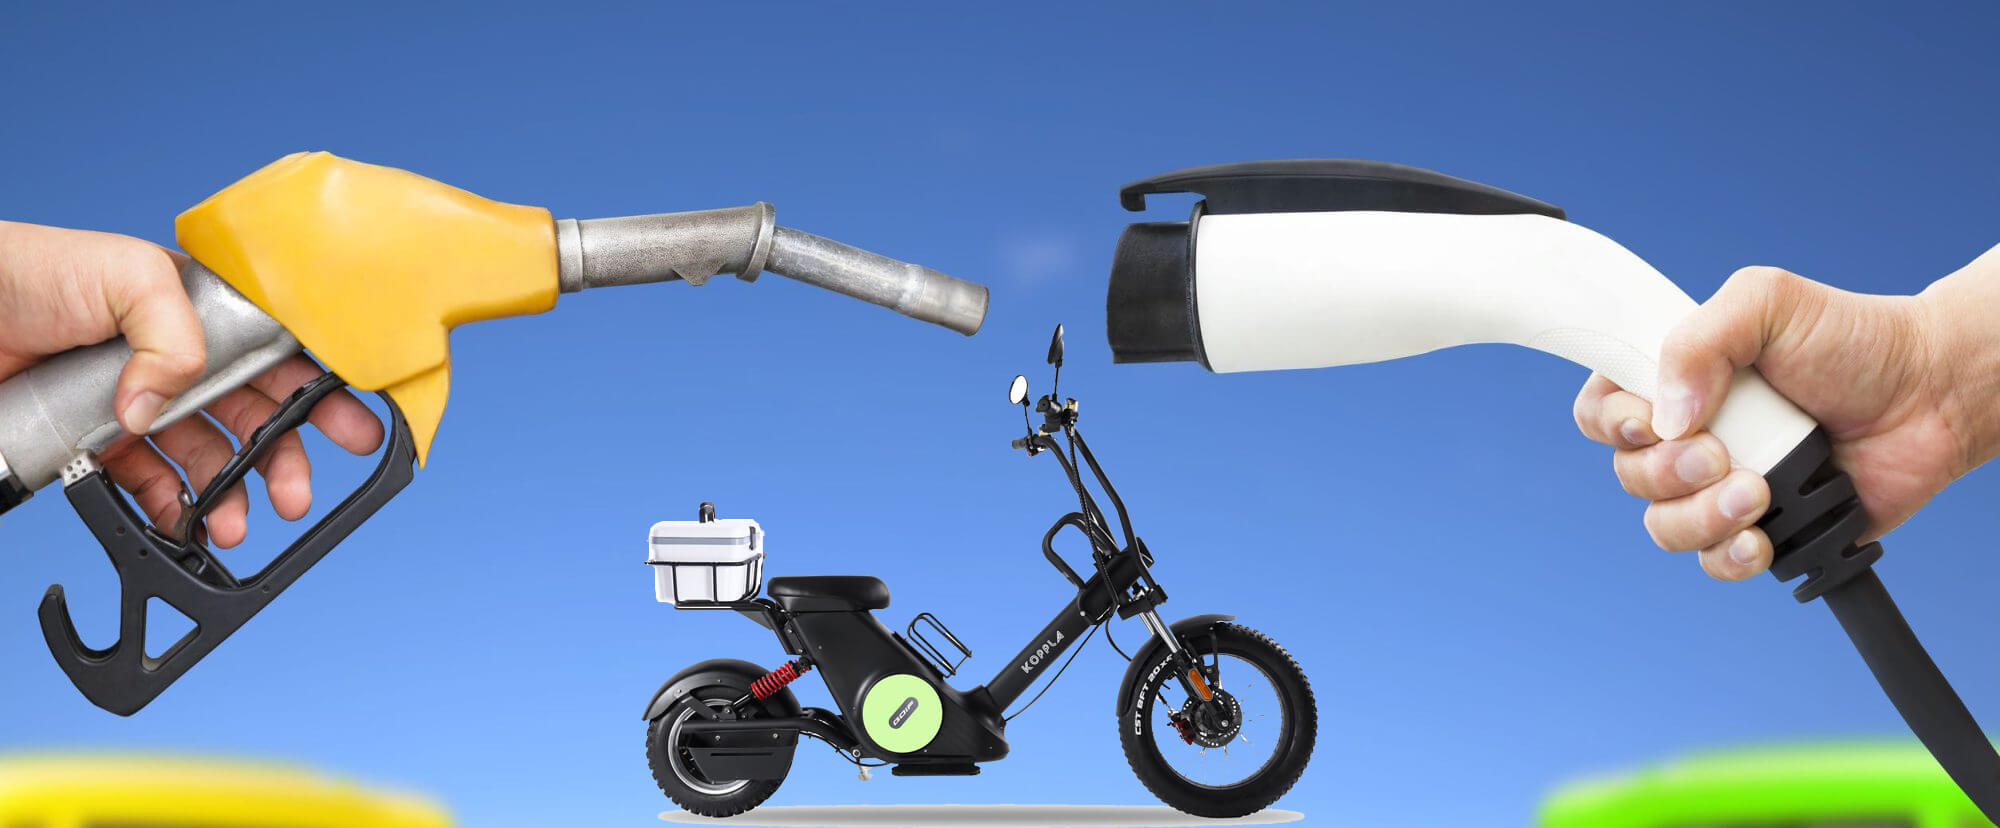 golf cart electric vs gas